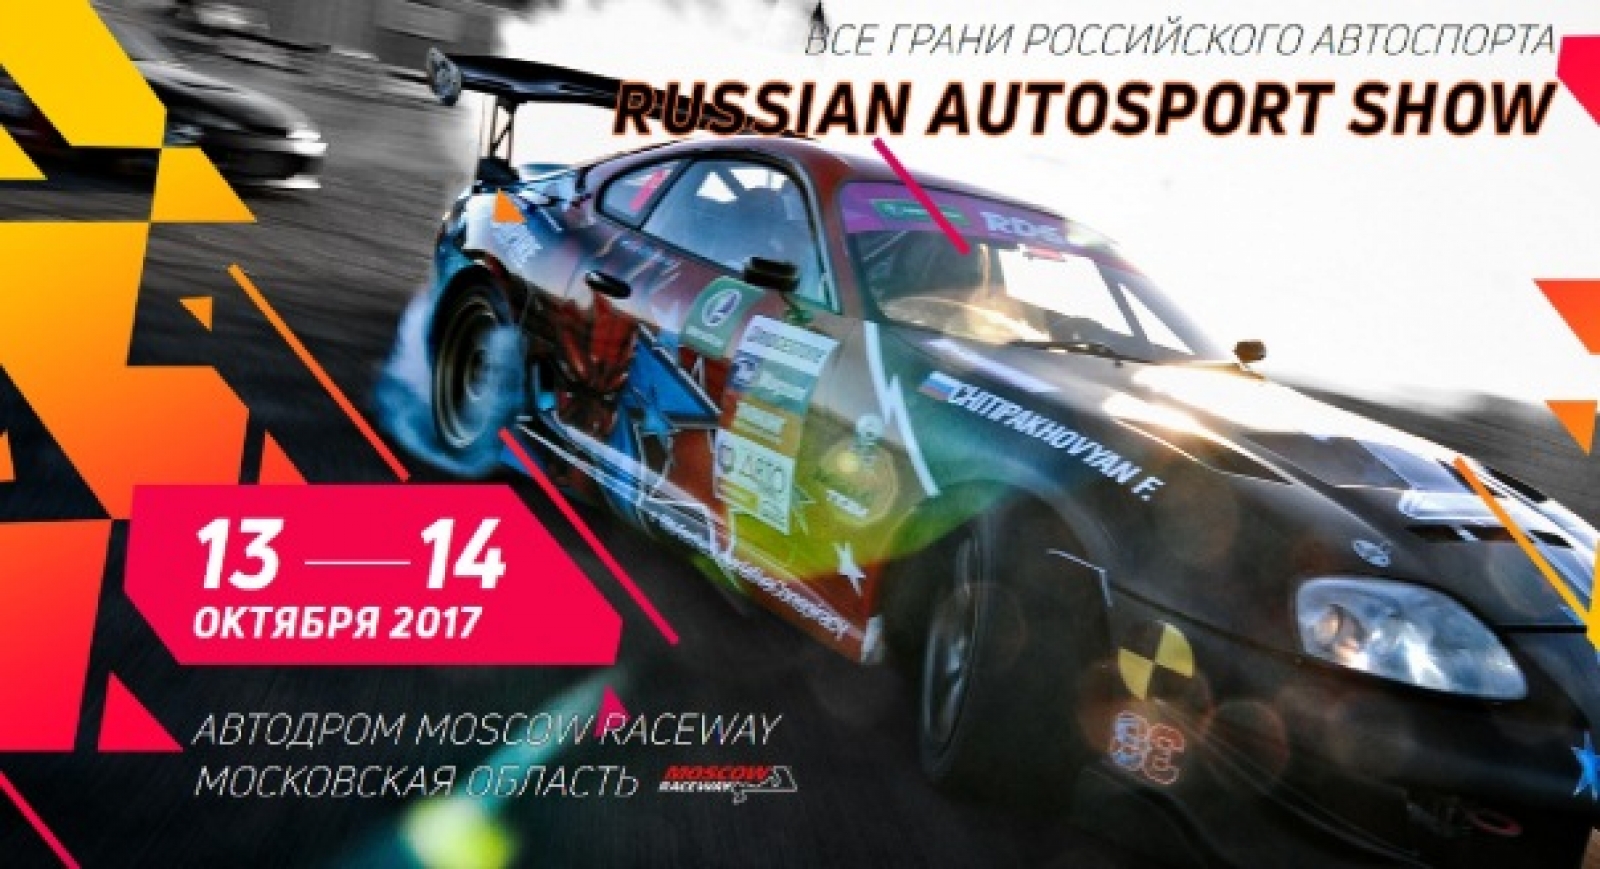 Russian Autosport Show: 13-14 октября